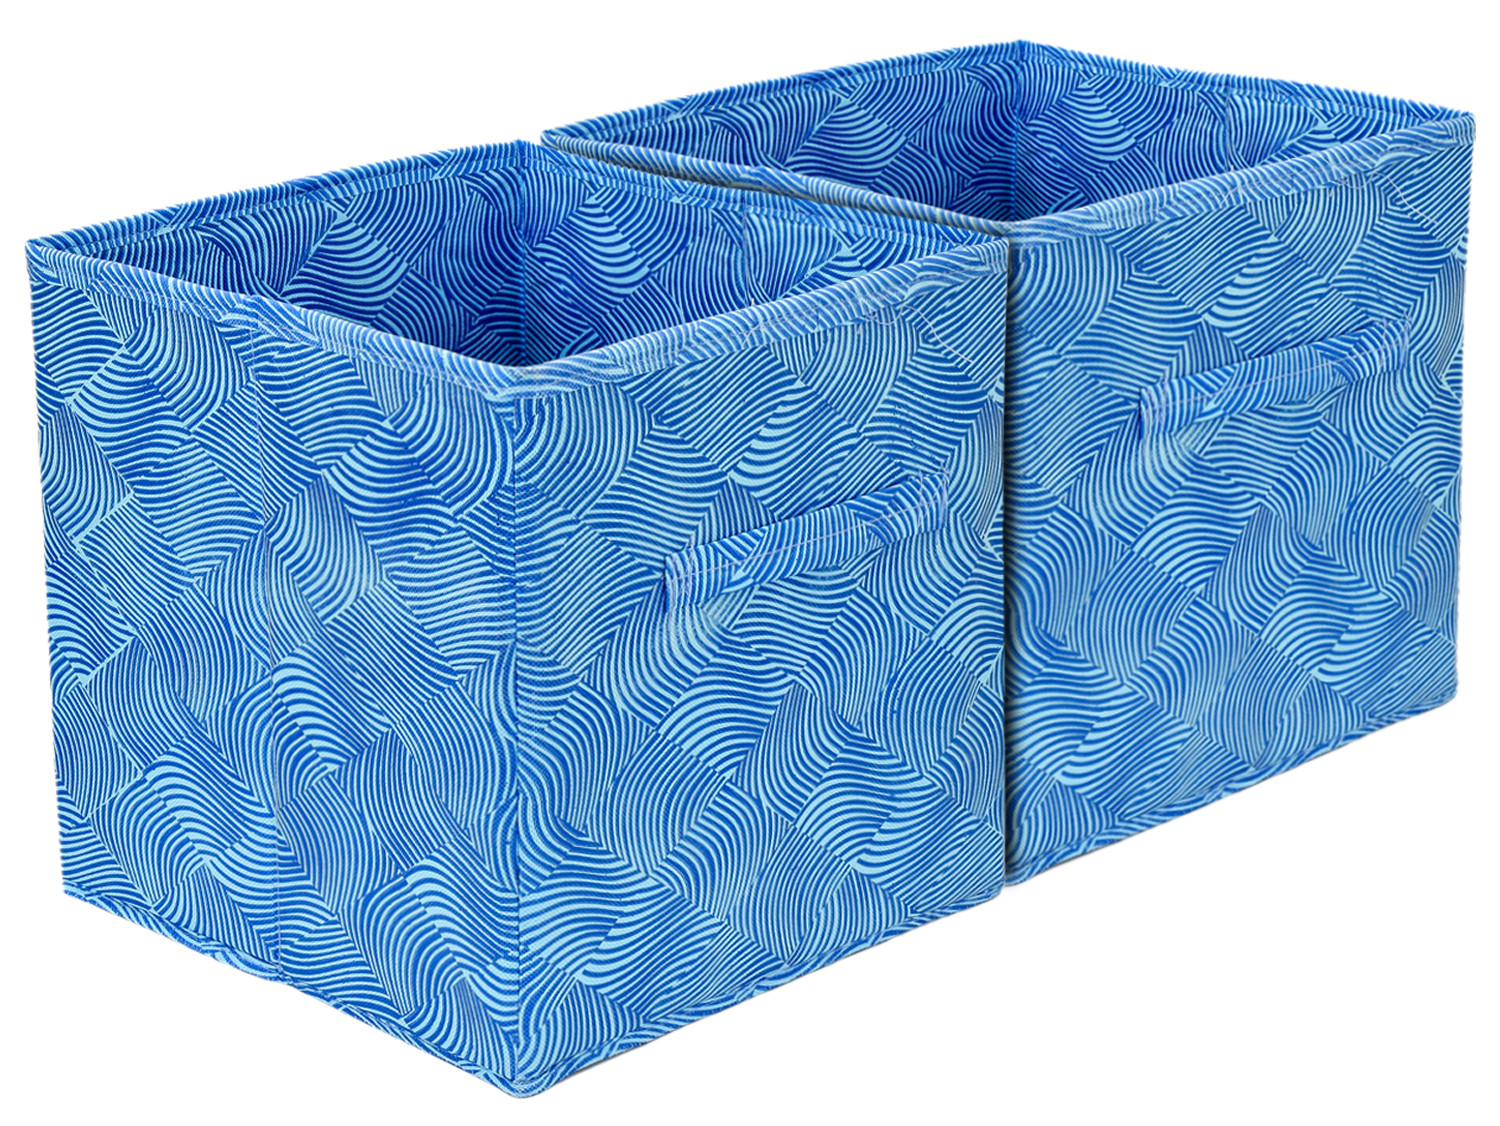 Kuber Industries Leheriya Print Non Woven Fabric Foldable Storage Cube Toy,Books,Shoes Storage Box With Handle,Extra Large (Blue)-KUBMART2089